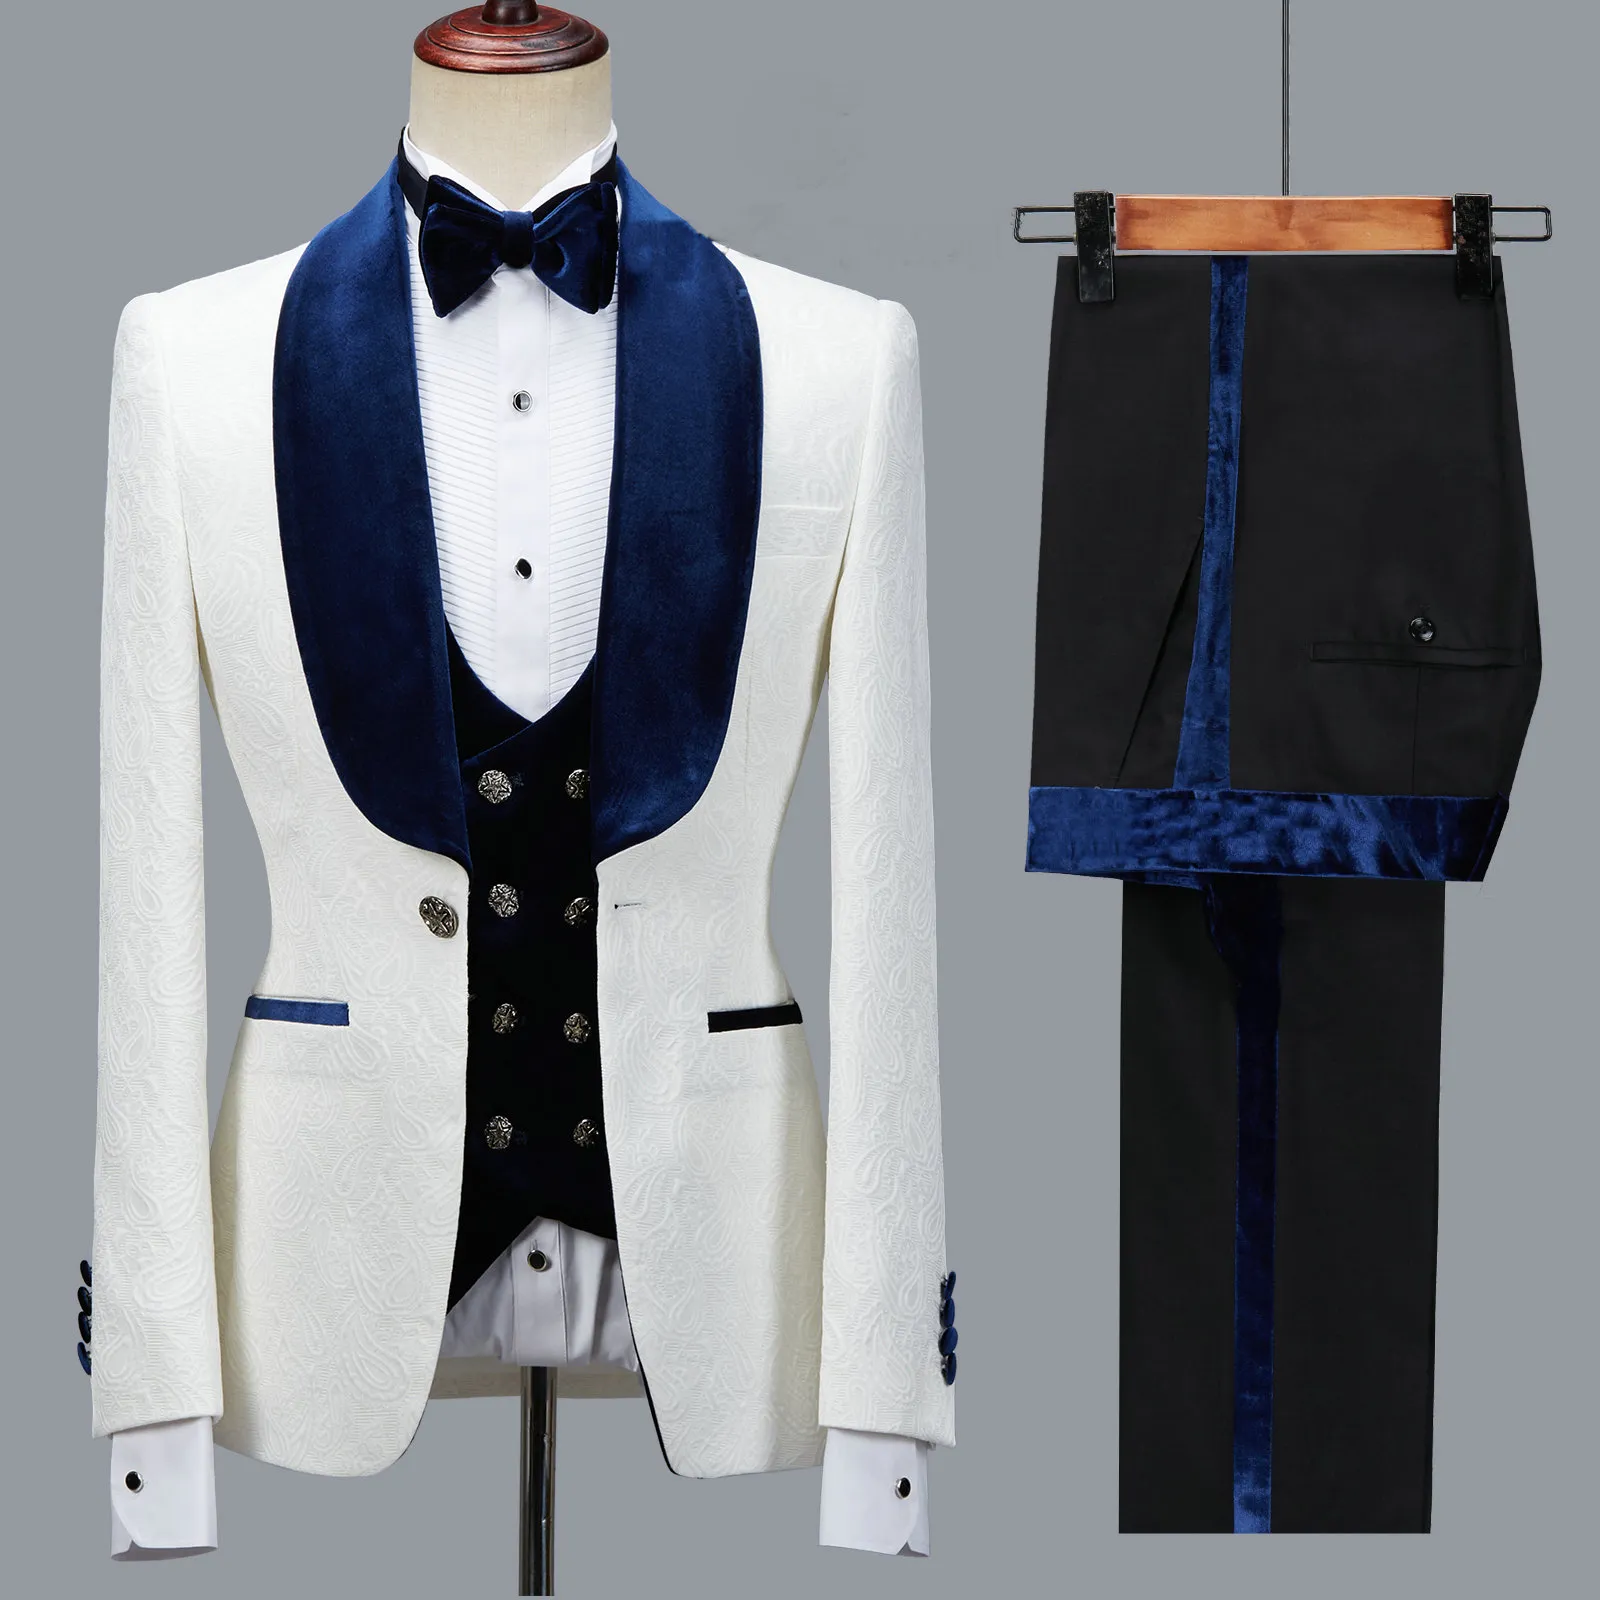 New Arrival Floral Men Suit Slim Fit Wedding Tuxedo Navy Blue Velvet Lapel Groom Party Suits Costume Homme Groomsman Blazer